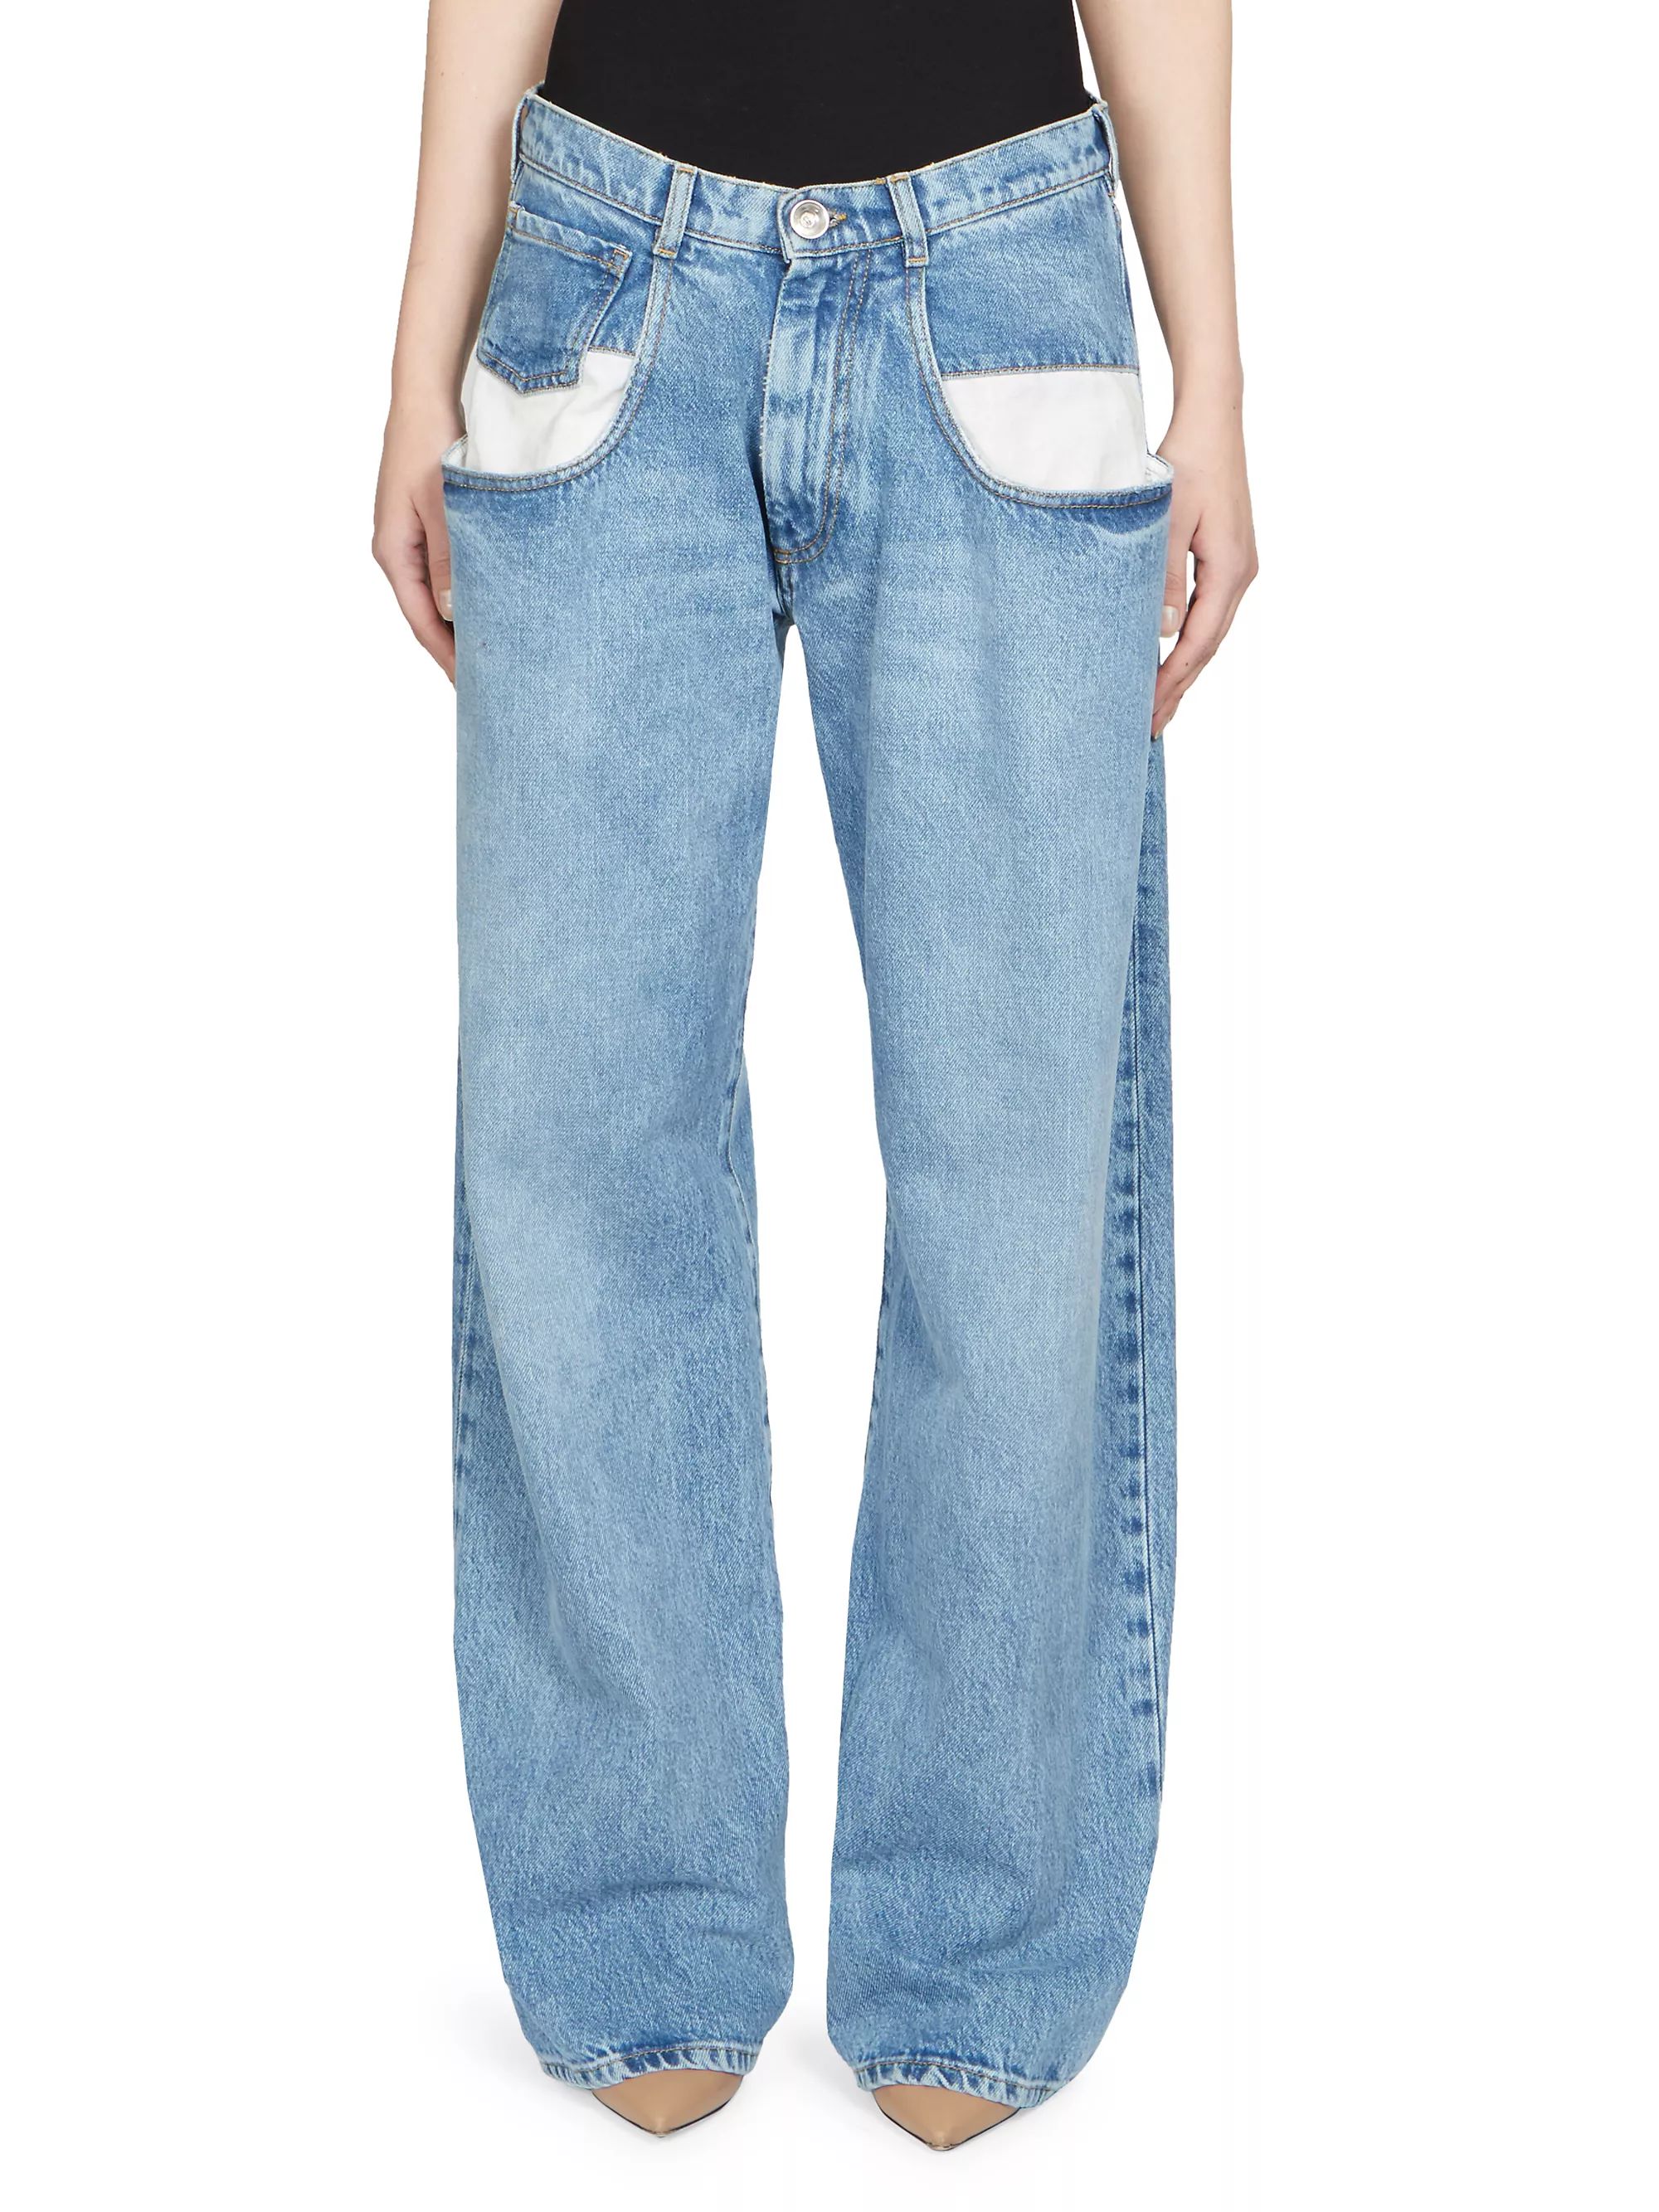 DenimAll Flare LegMaison MargielaBoot-Cut Jeans$730
            
          SELECT SIZE Free Ship... | Saks Fifth Avenue